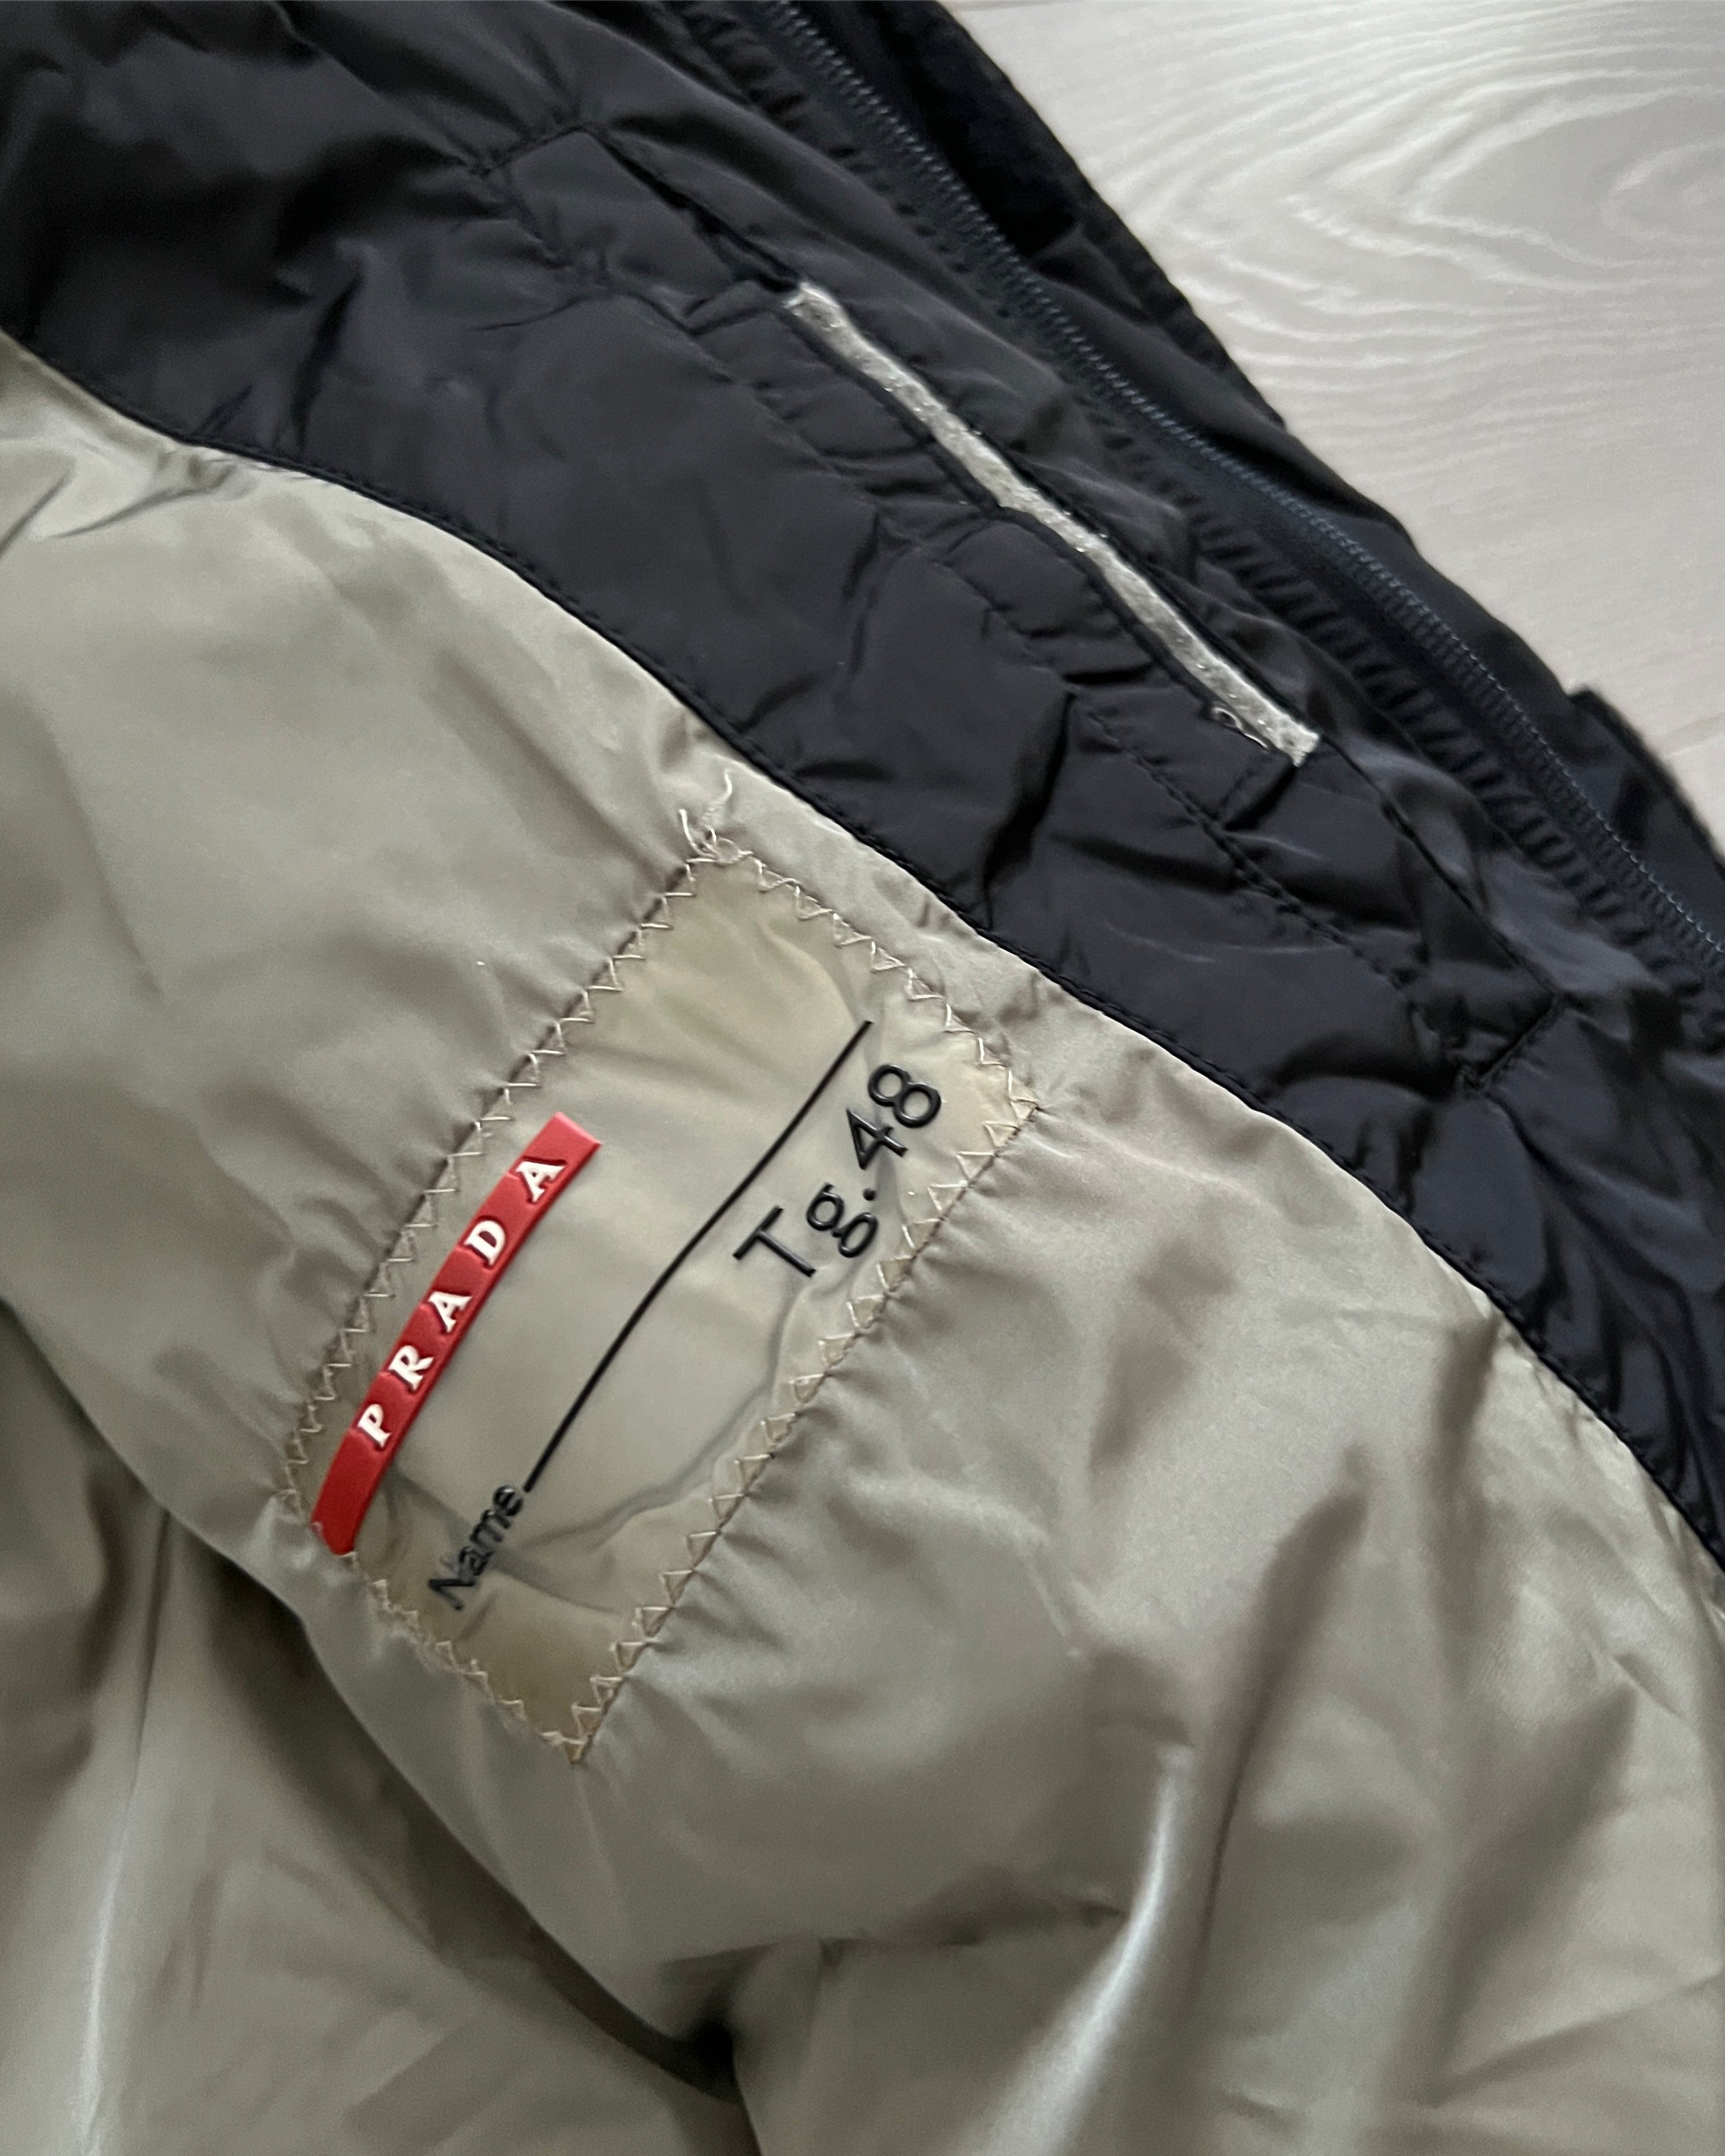 Prada Sport Early 2000s Nylon Toggled Down Puffer Jacket - Size M 